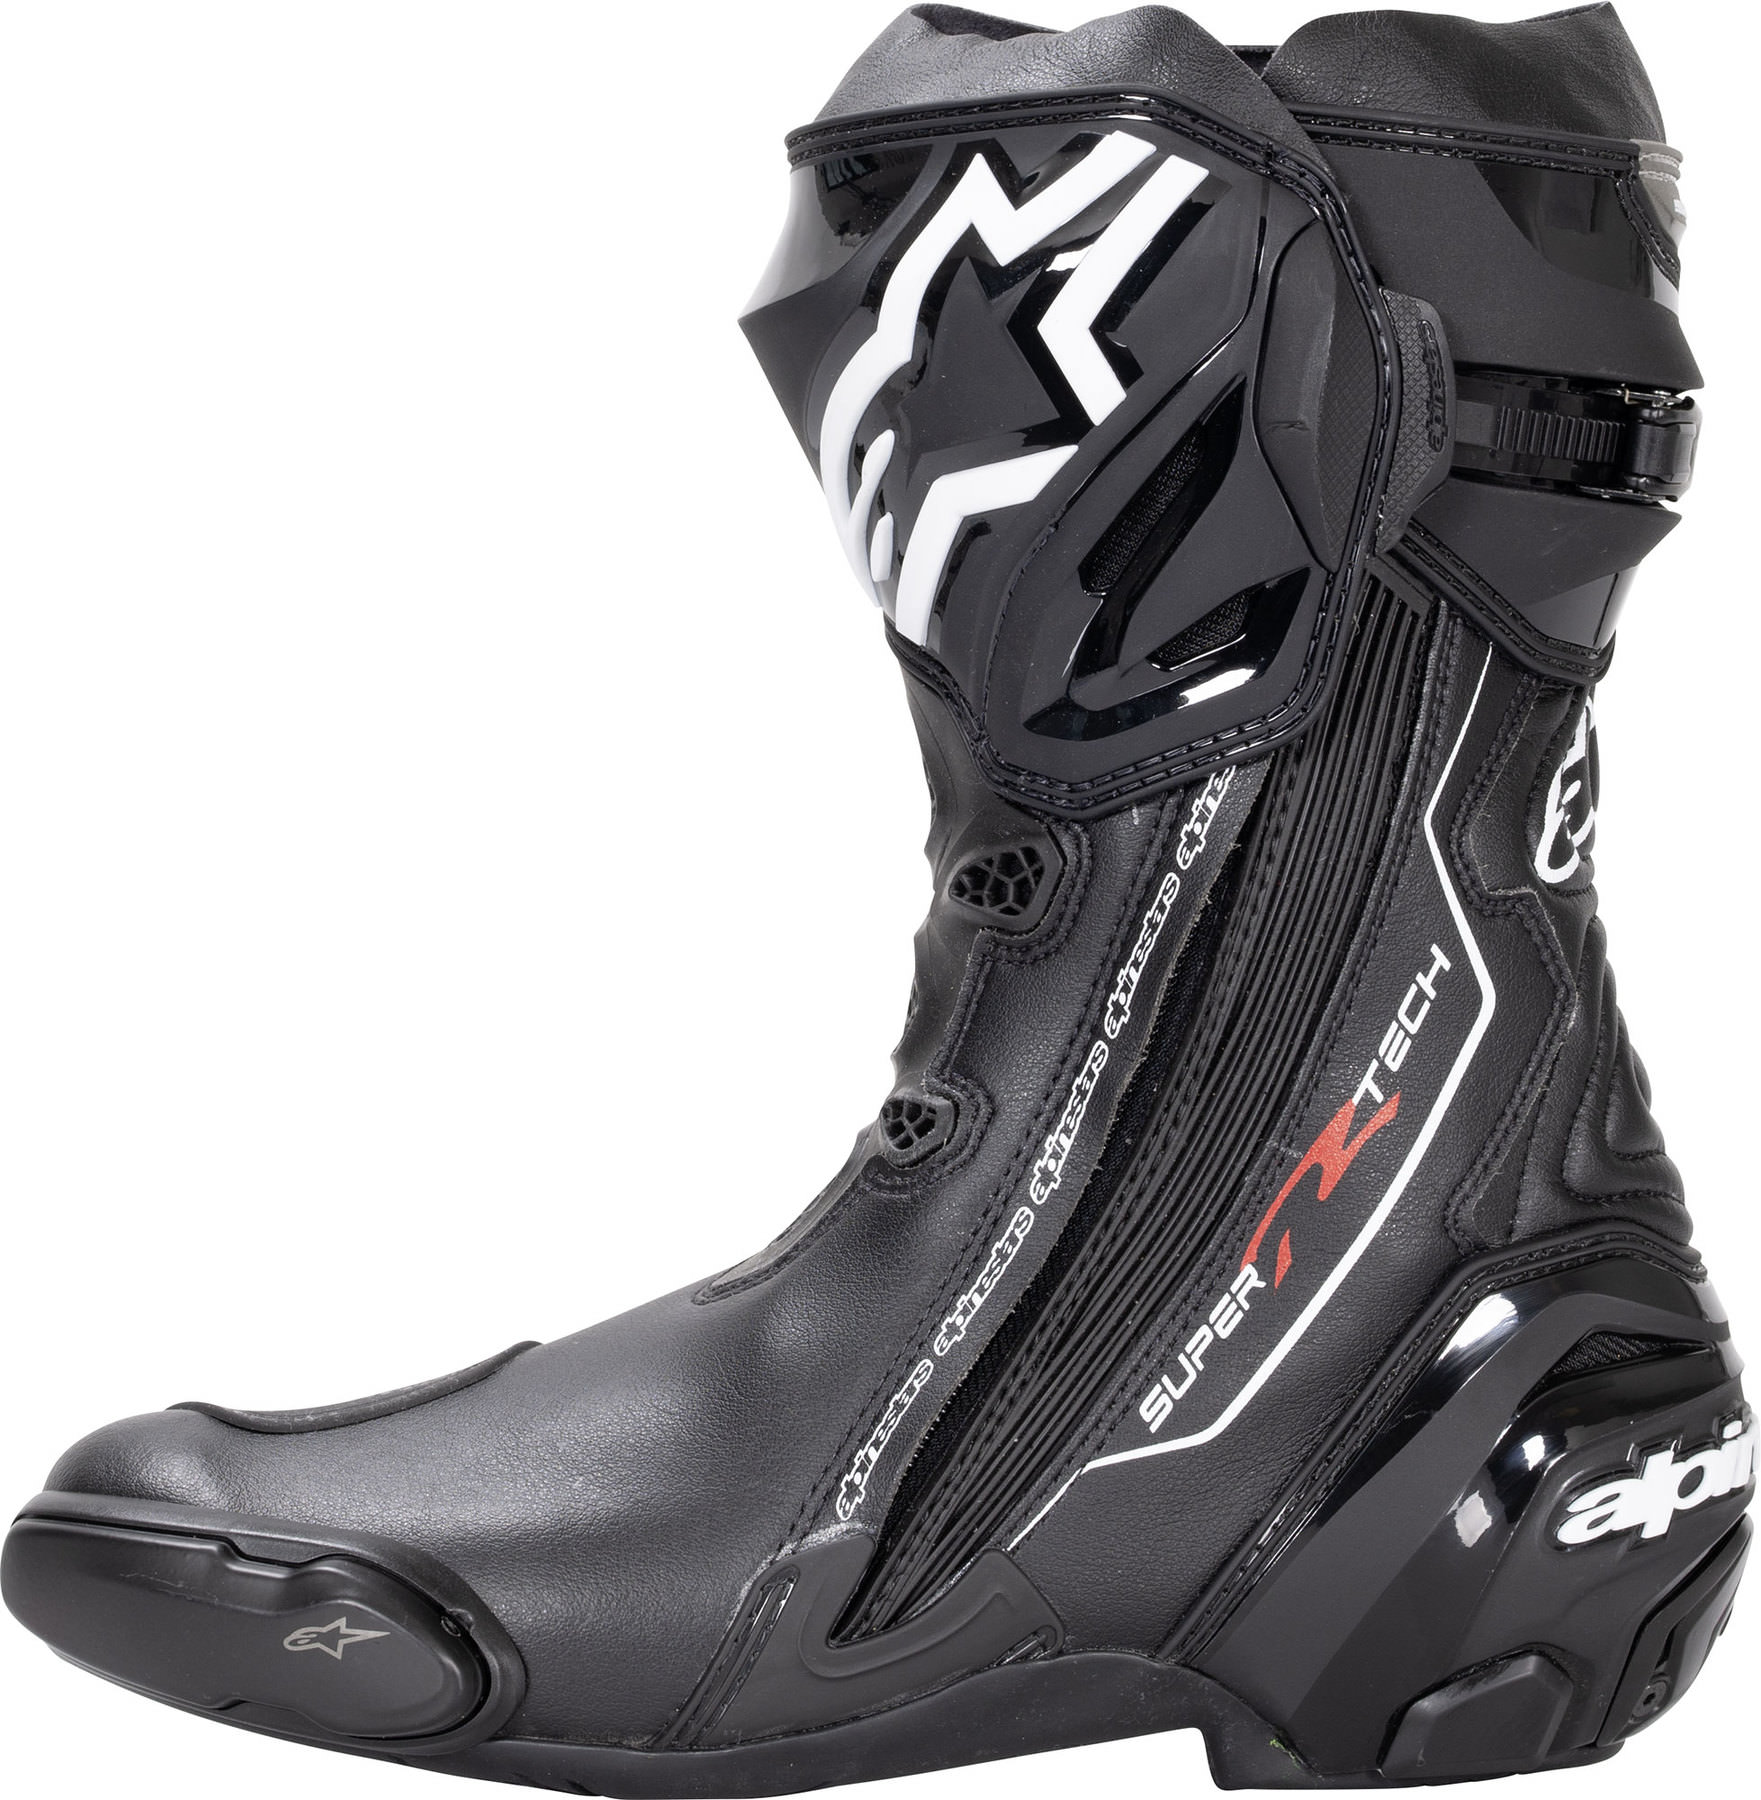 Buy Alpinestars Supertech R Boots 